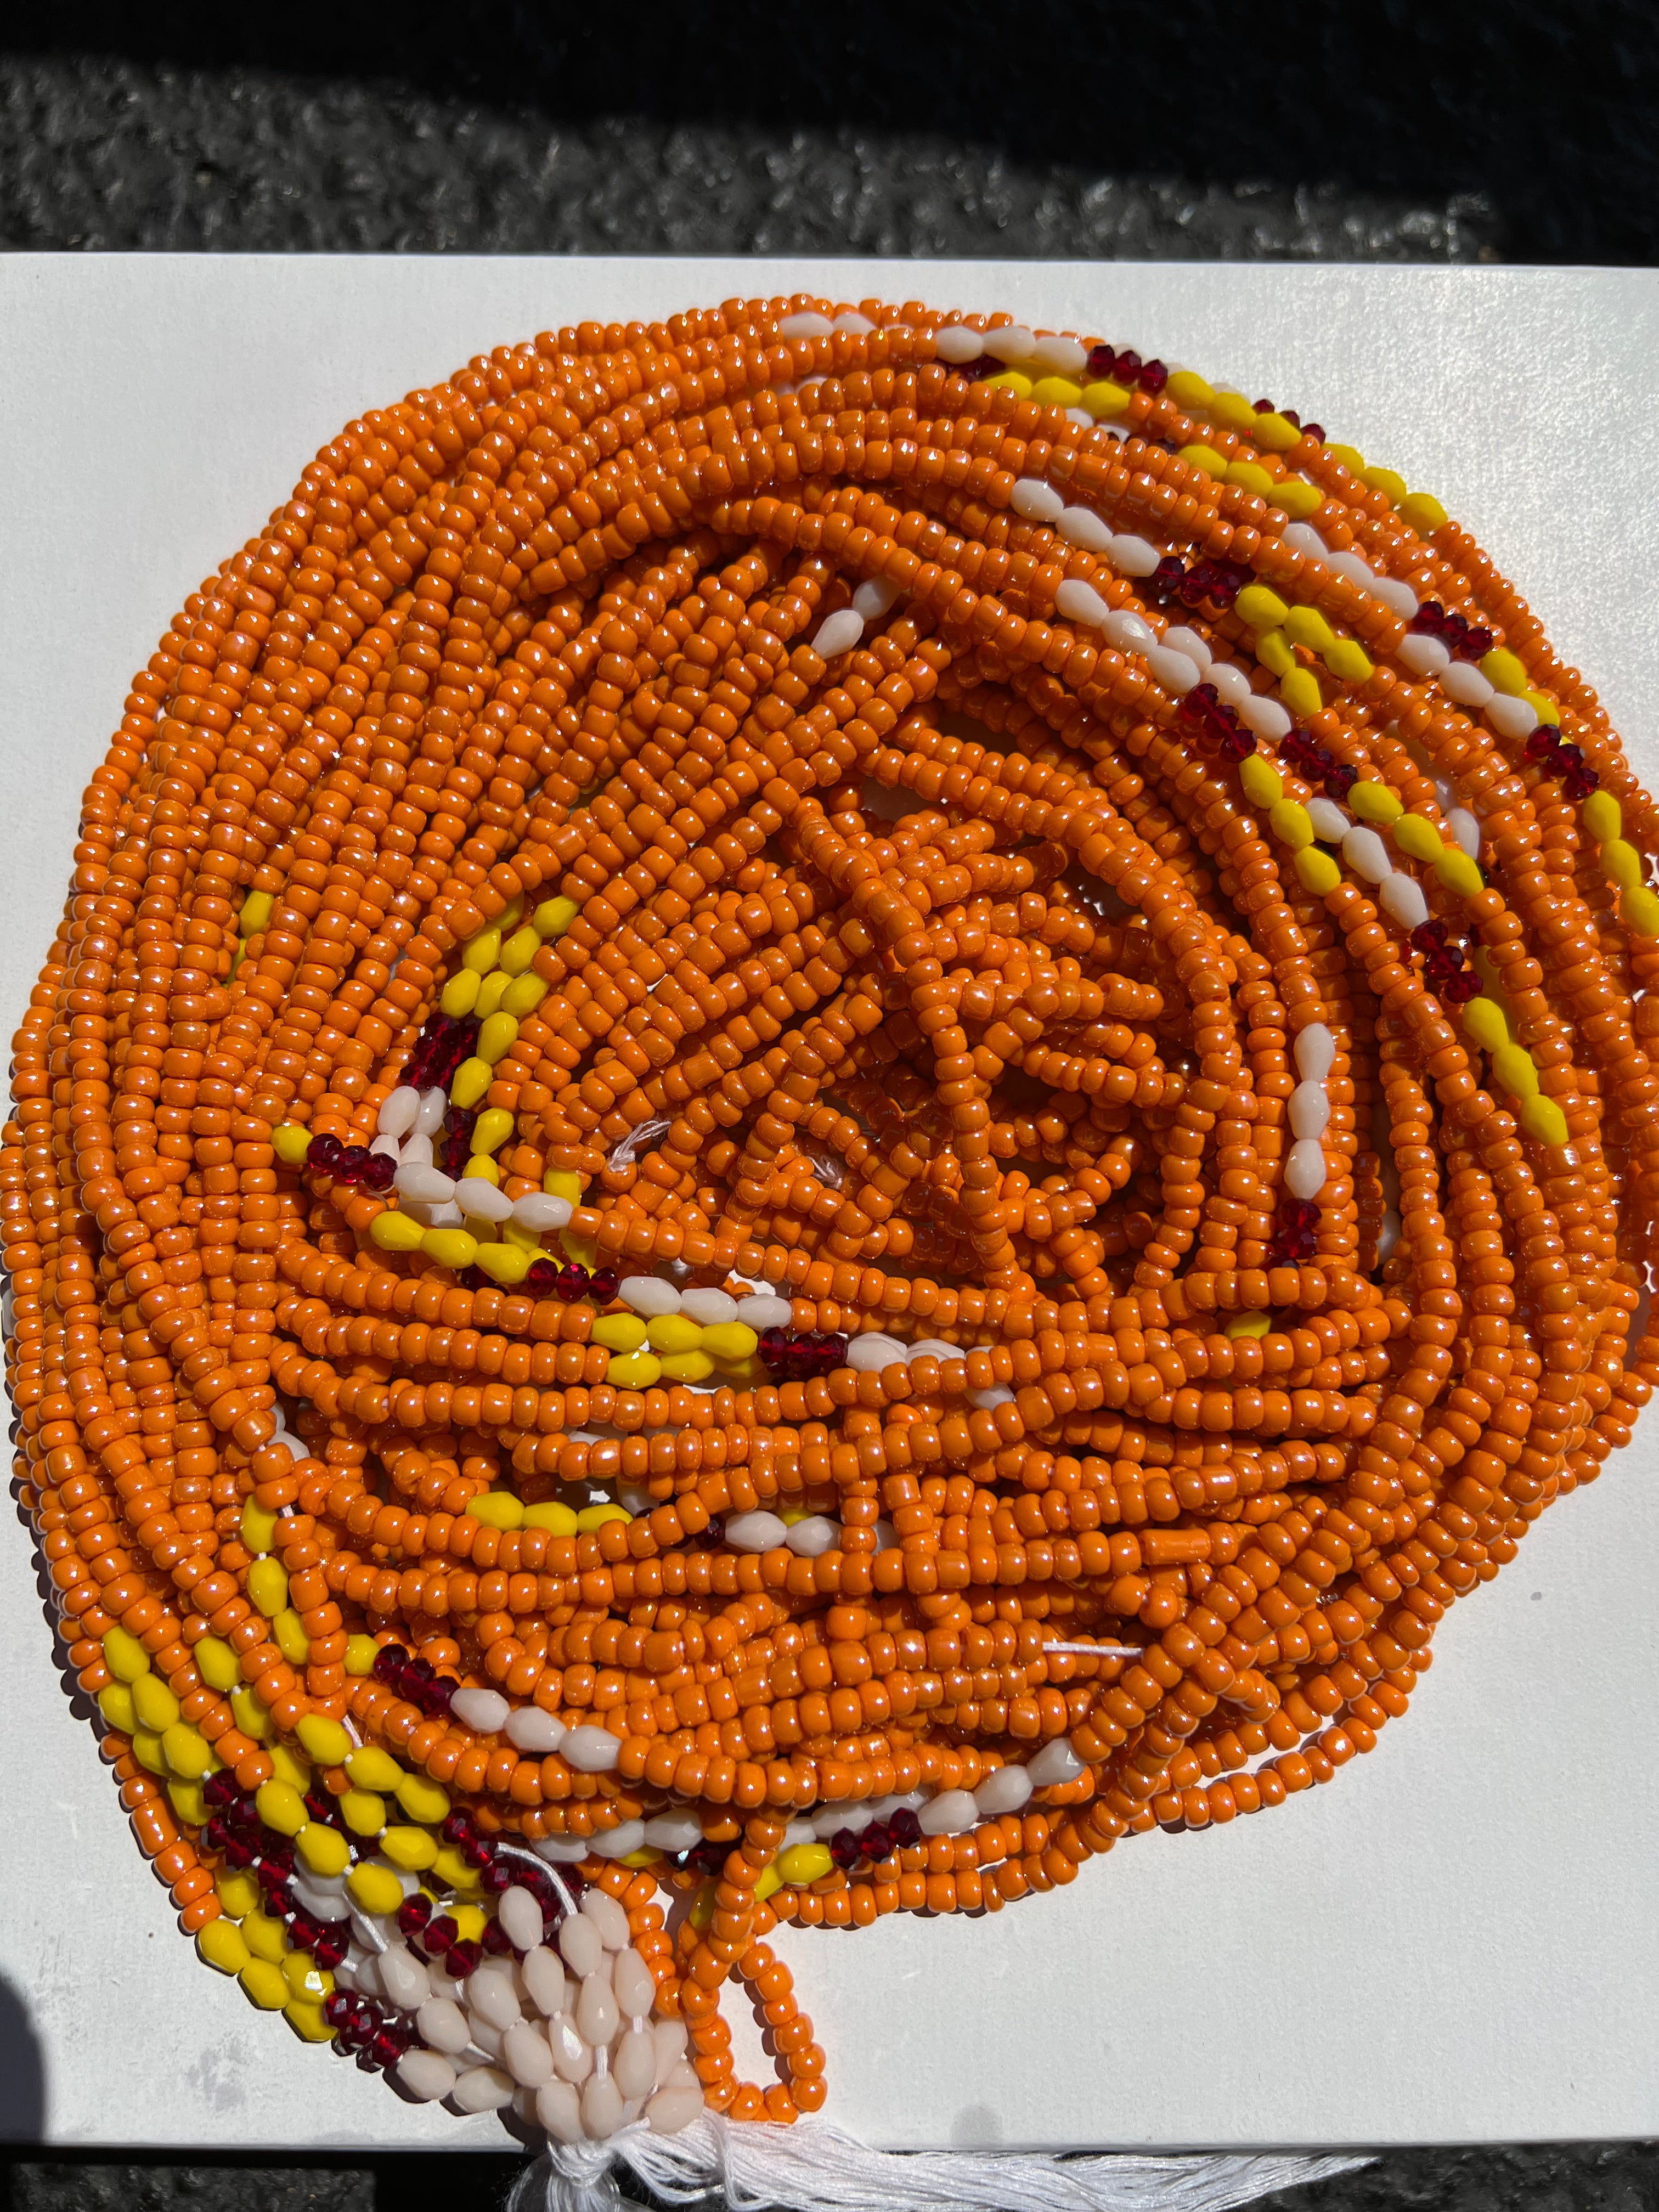 Georgia Peach waist beads with crystals - Tie on  waist beads - 47 inches